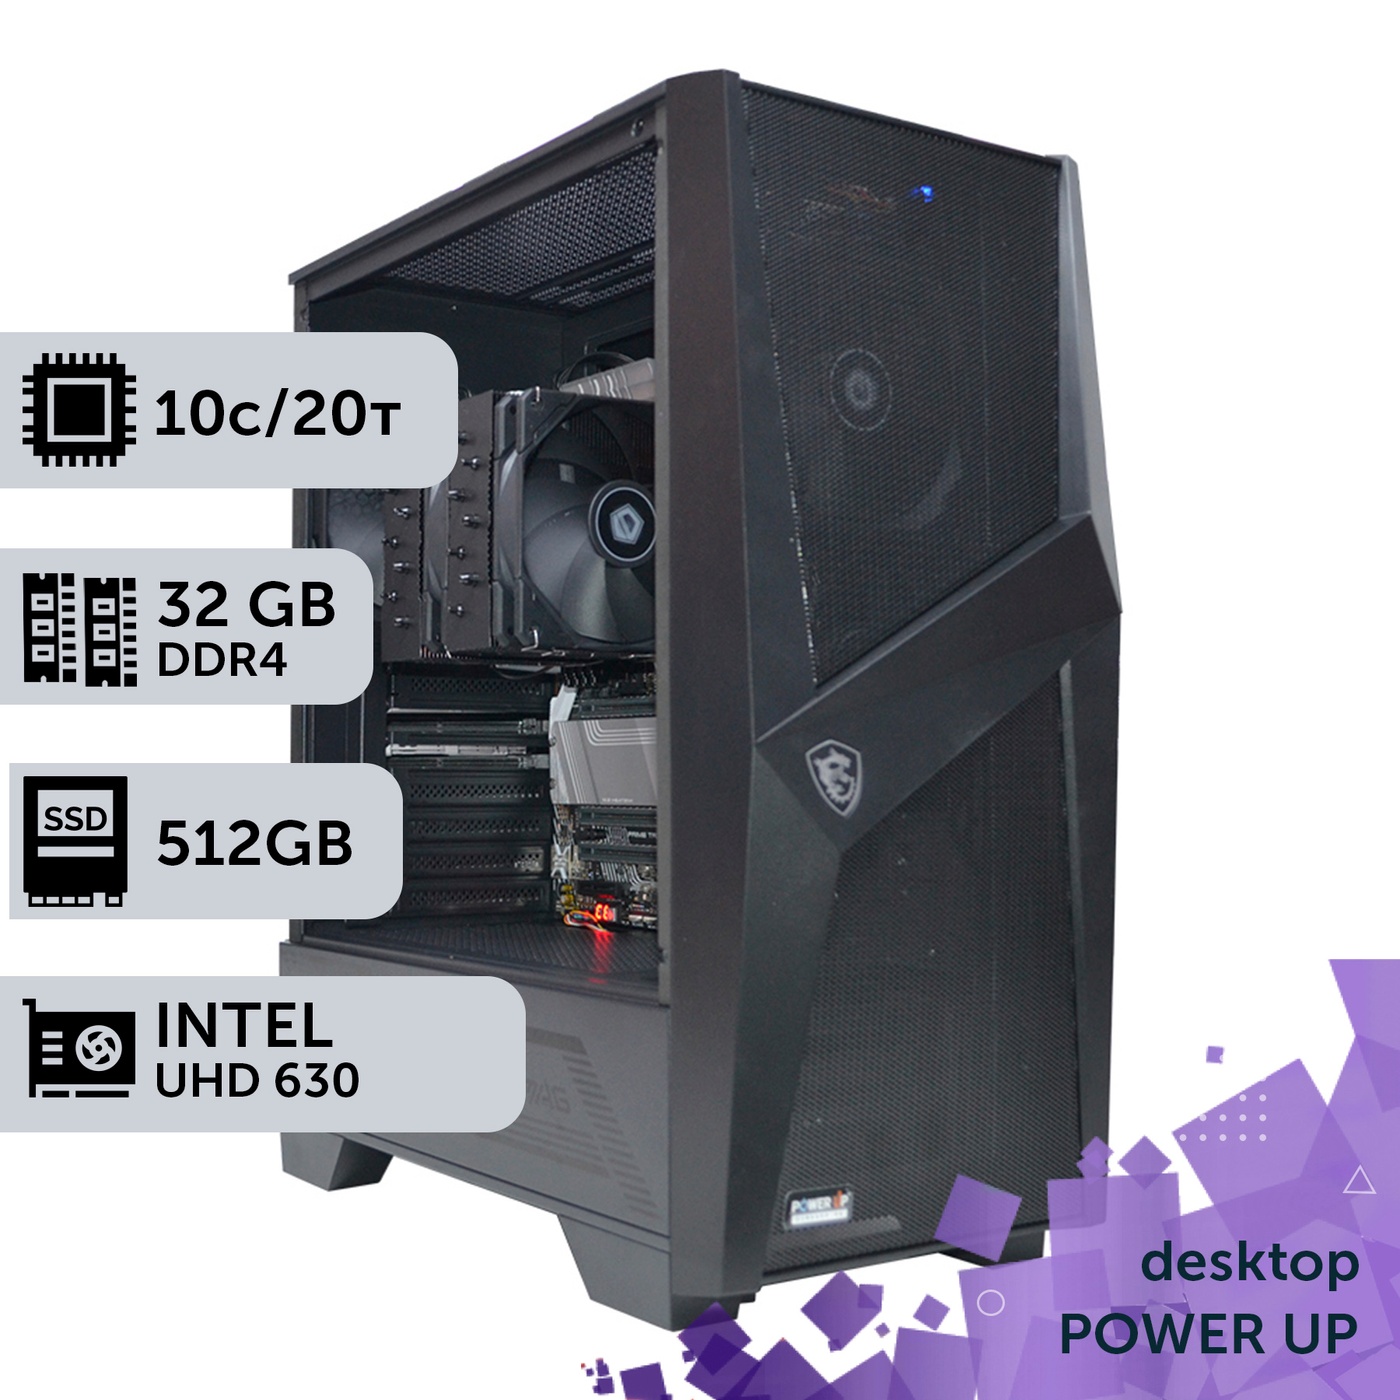 Рабочая станция PowerUp Desktop #55 Core i9 10900K/32 GB/HDD 1 TB/SSD 512GB/Int Video